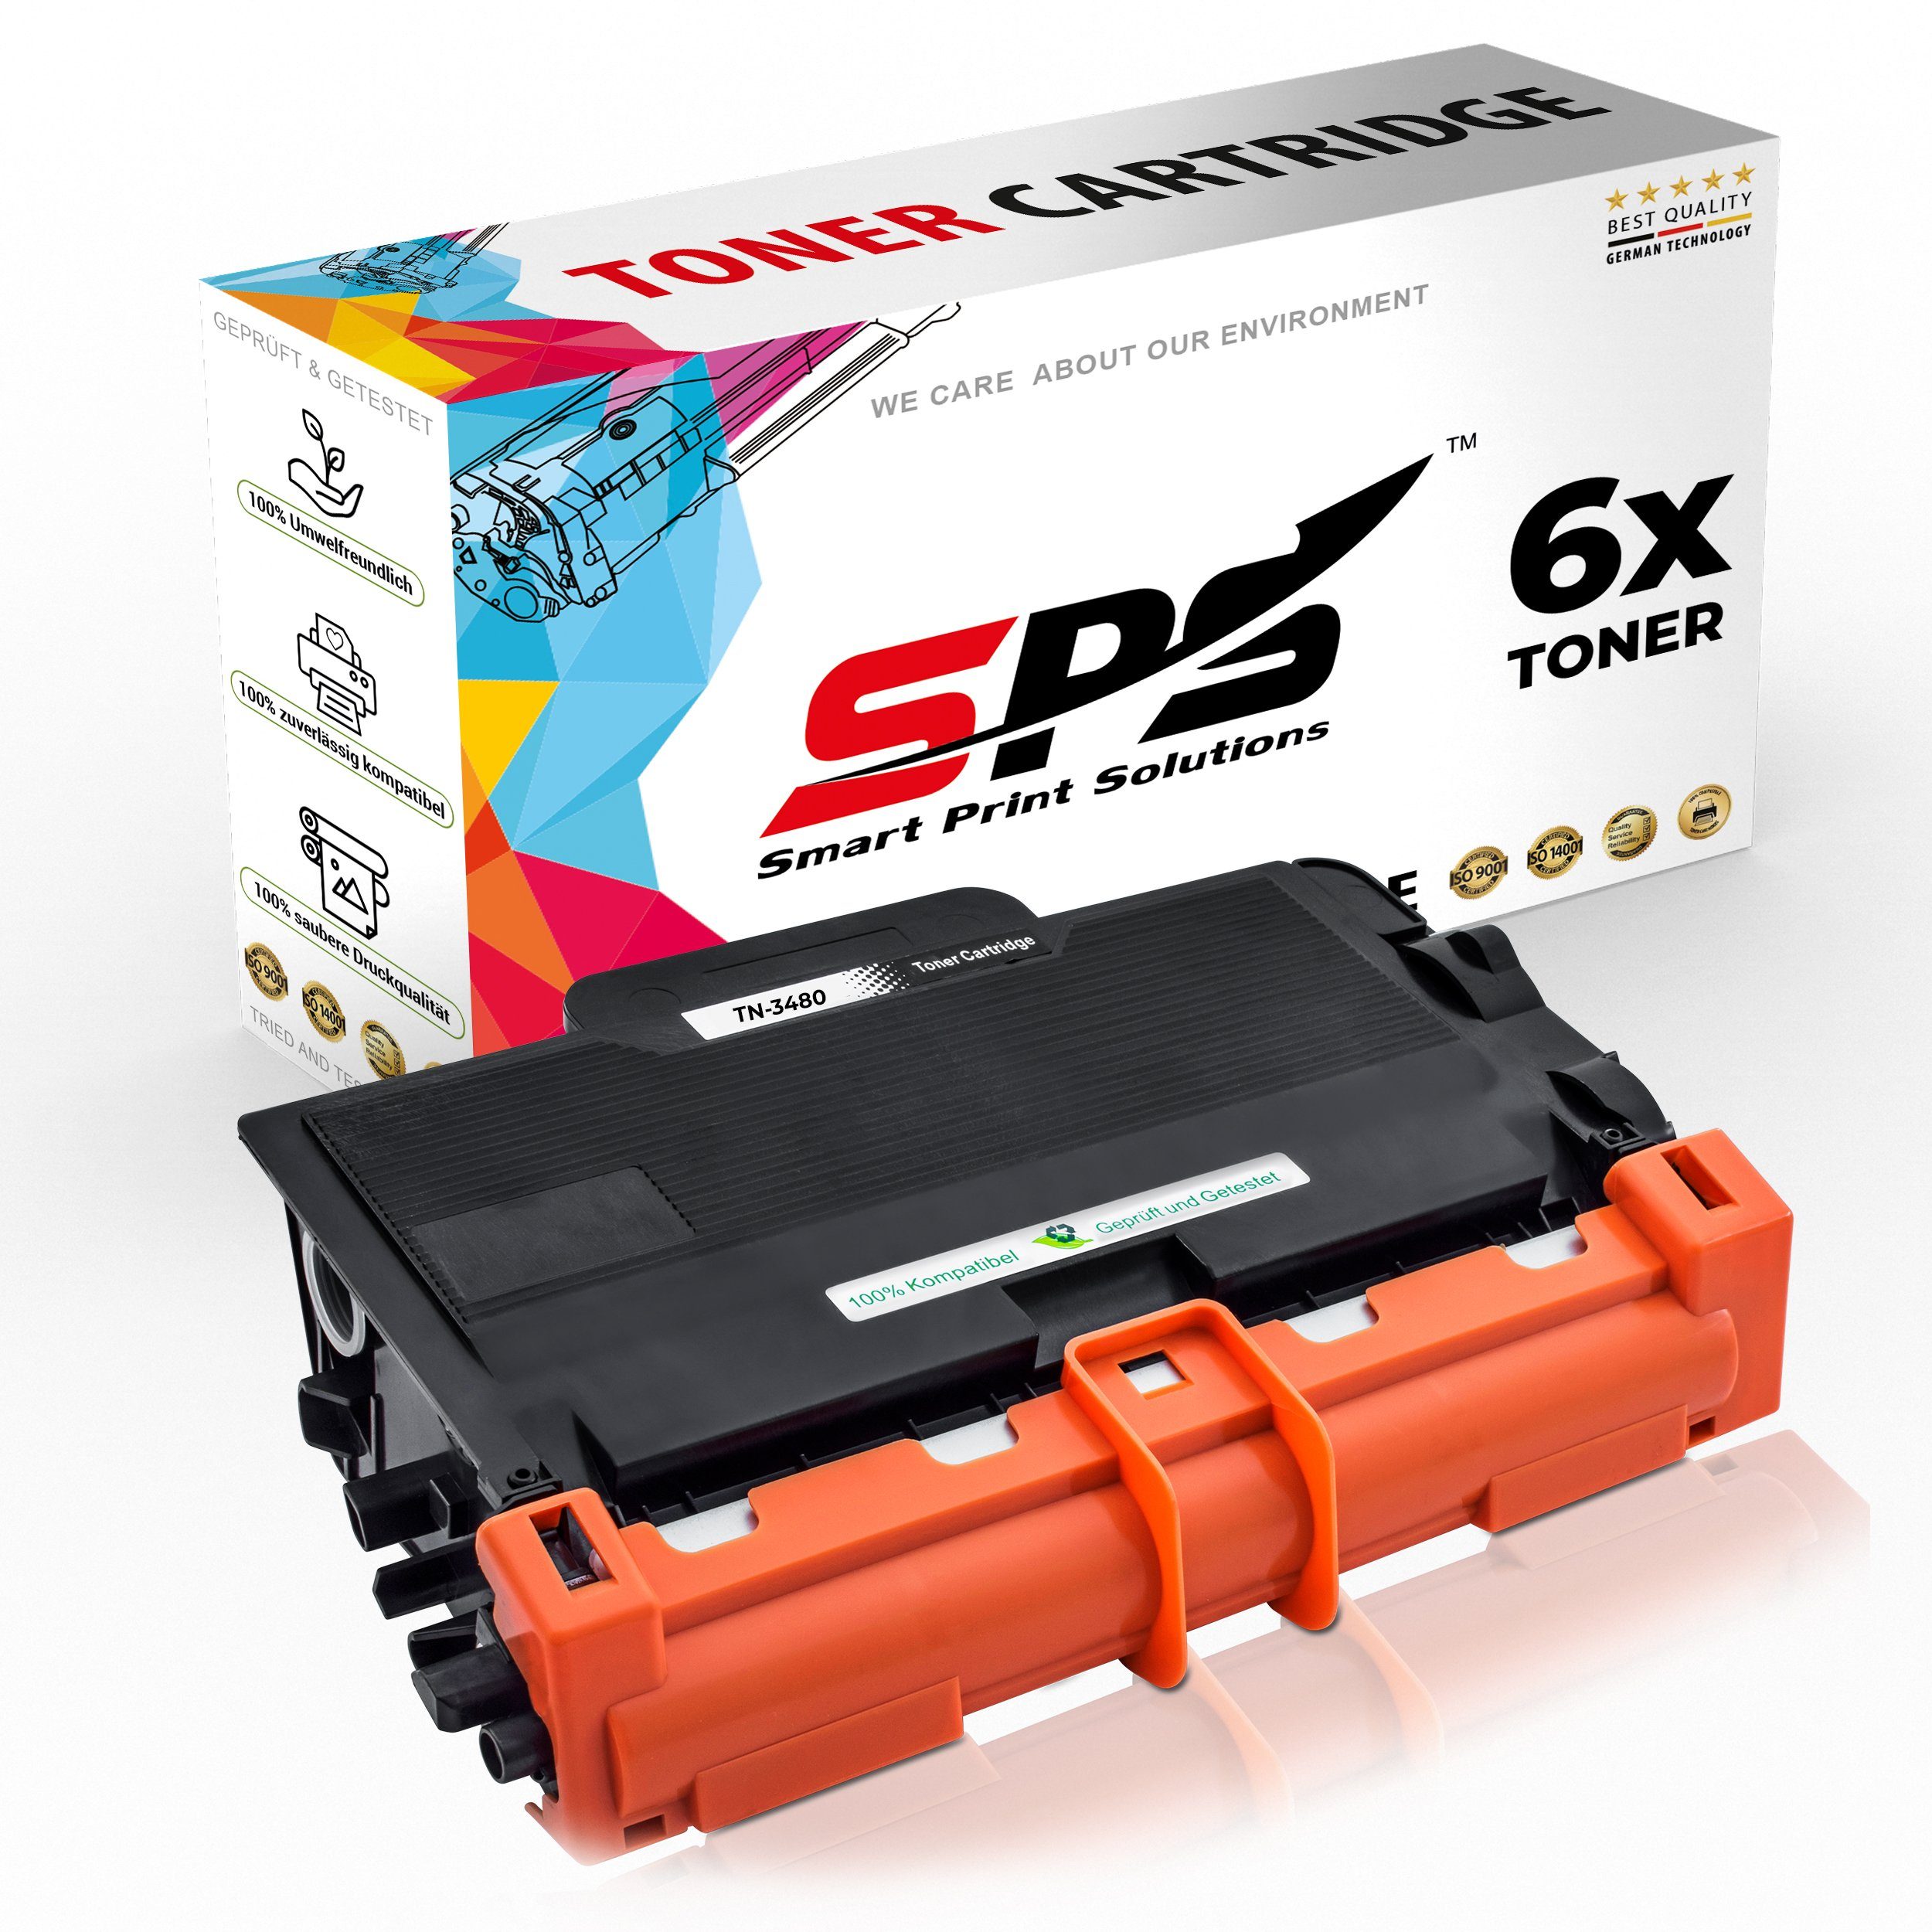 SPS Tonerkartusche Kompatibel für Brother HL-5580 TN-3430, (6er Pack) | Tonerpatronen